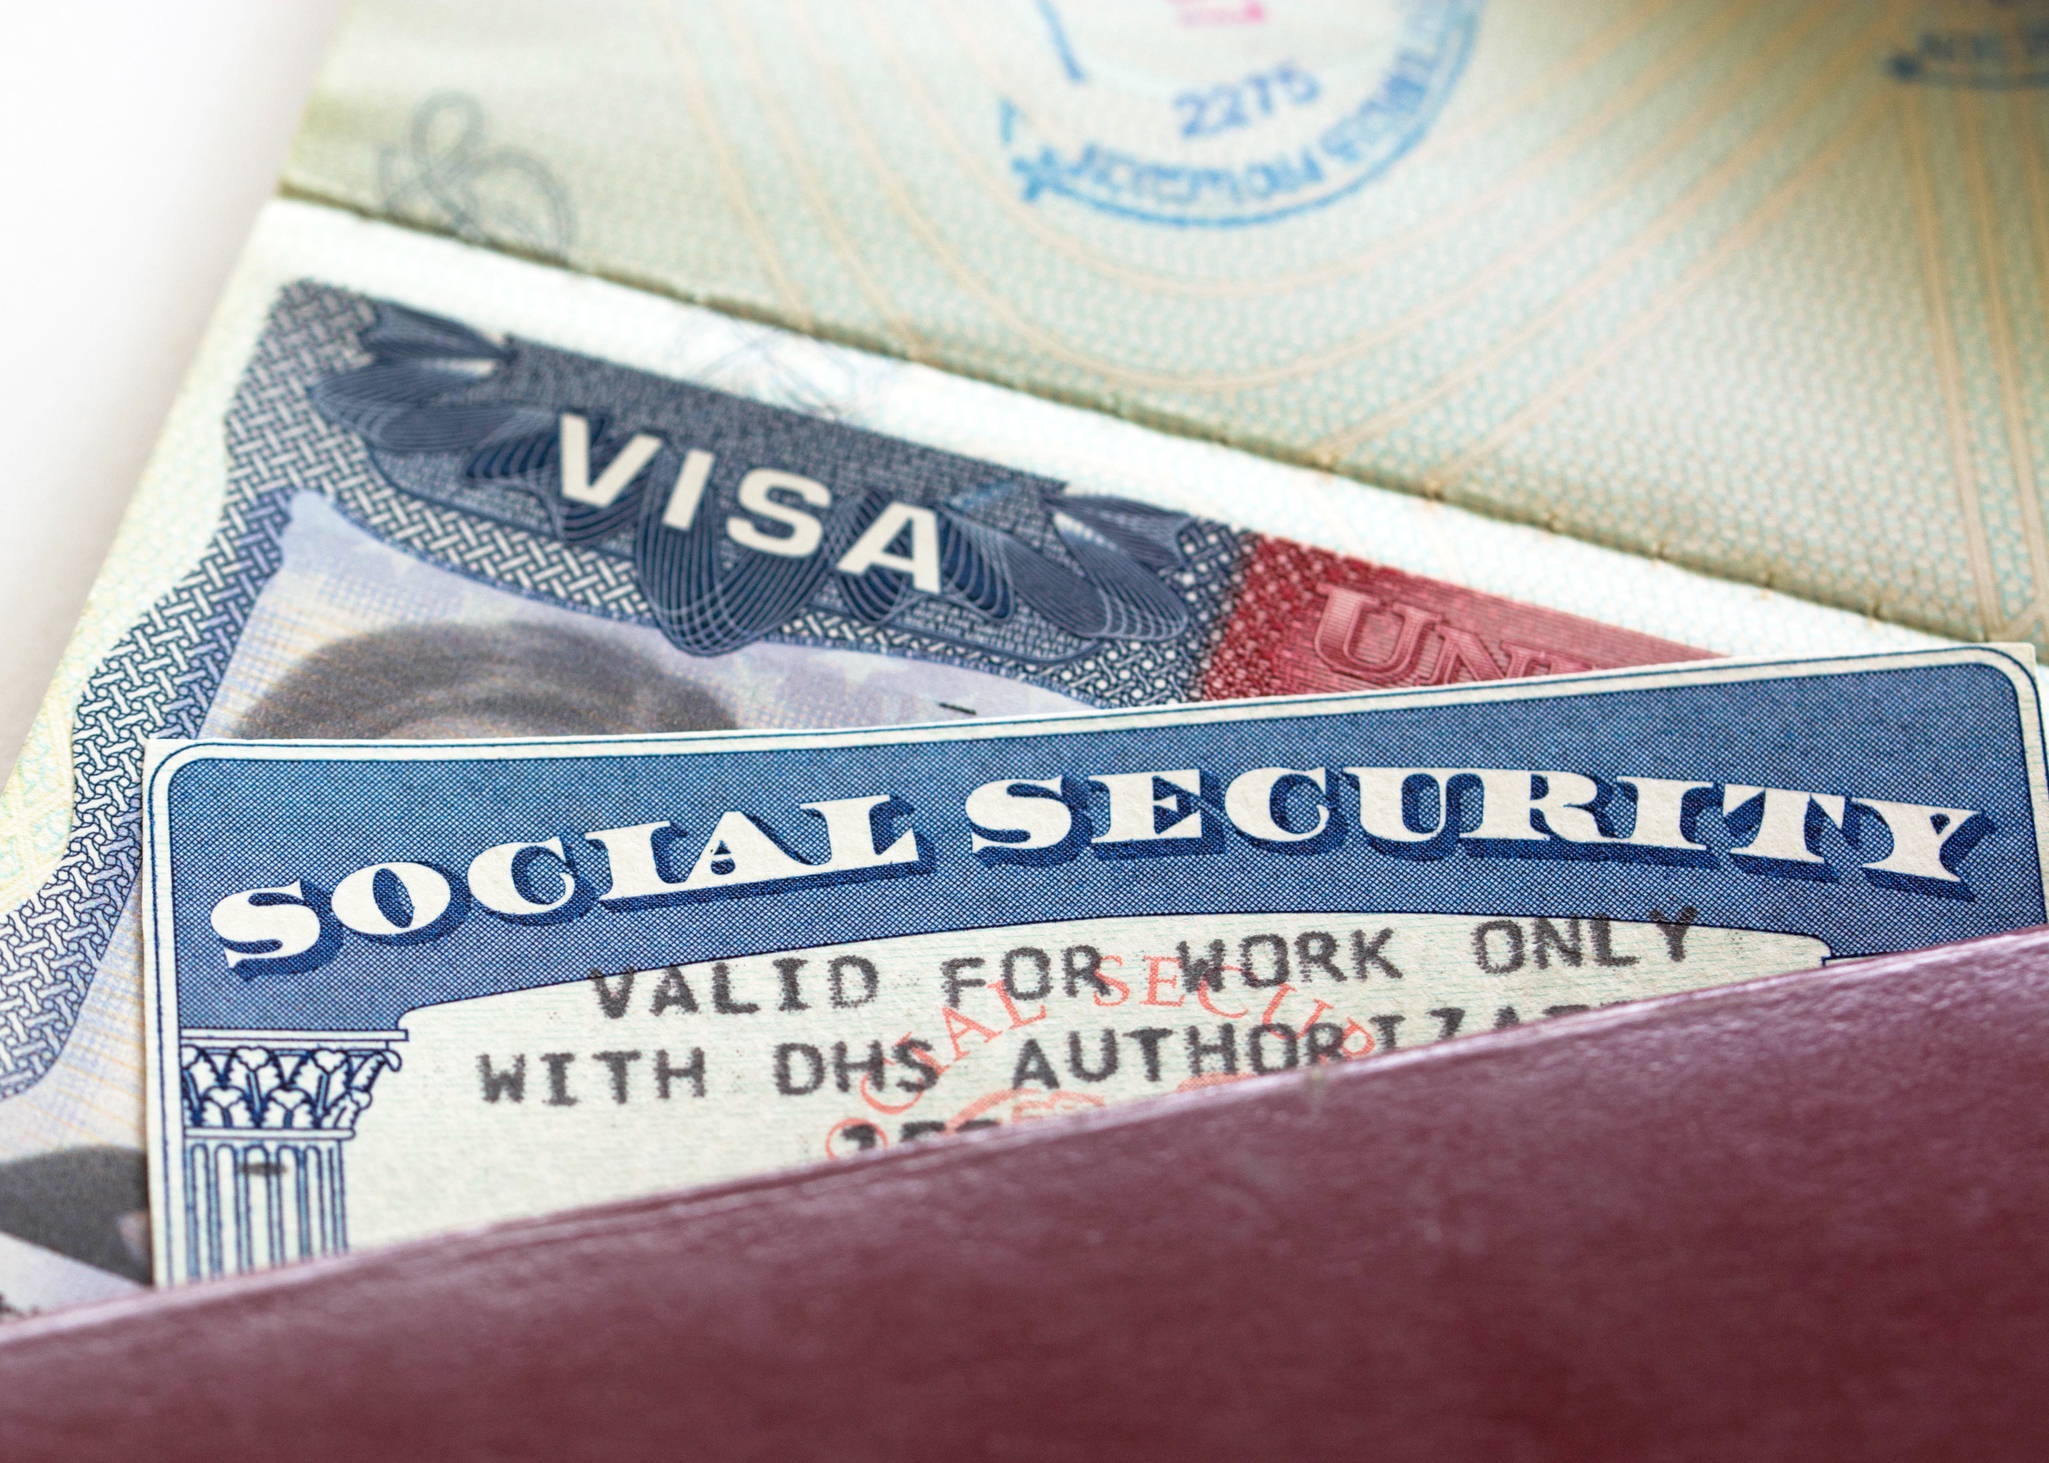 Immigration visa, citizen's social security card